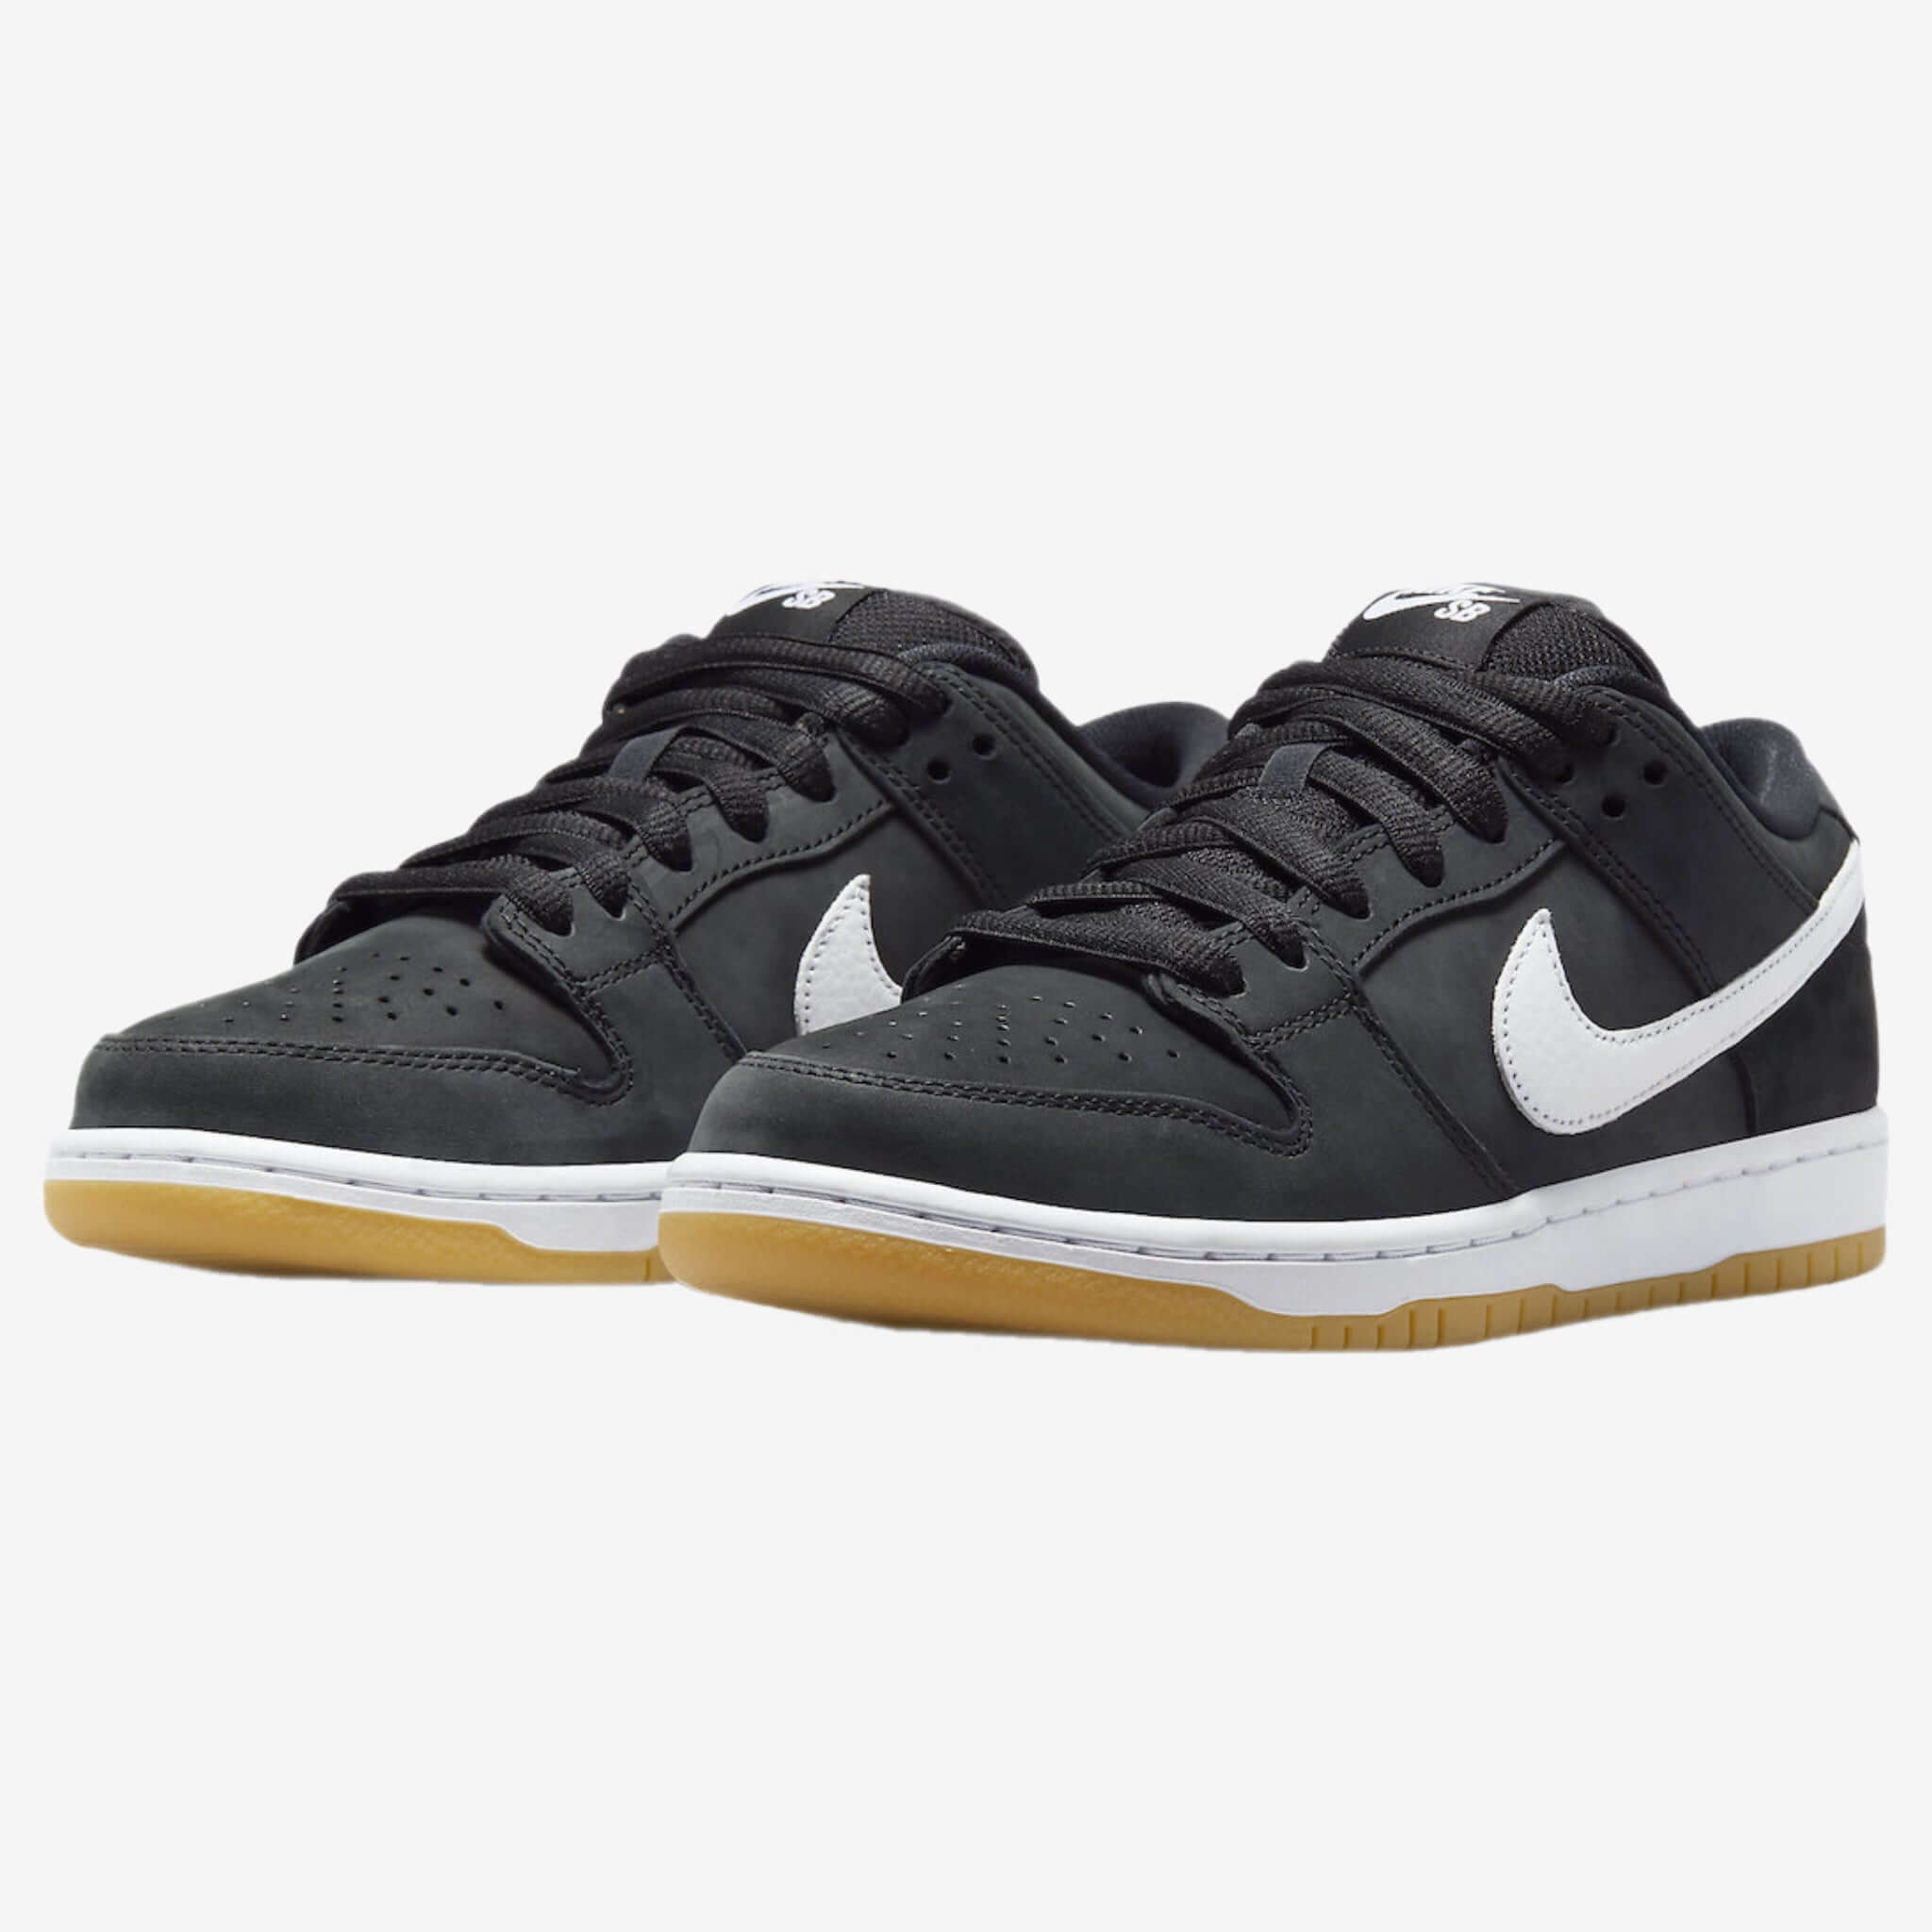 Nike SB Dunk Low “Black/Gum”